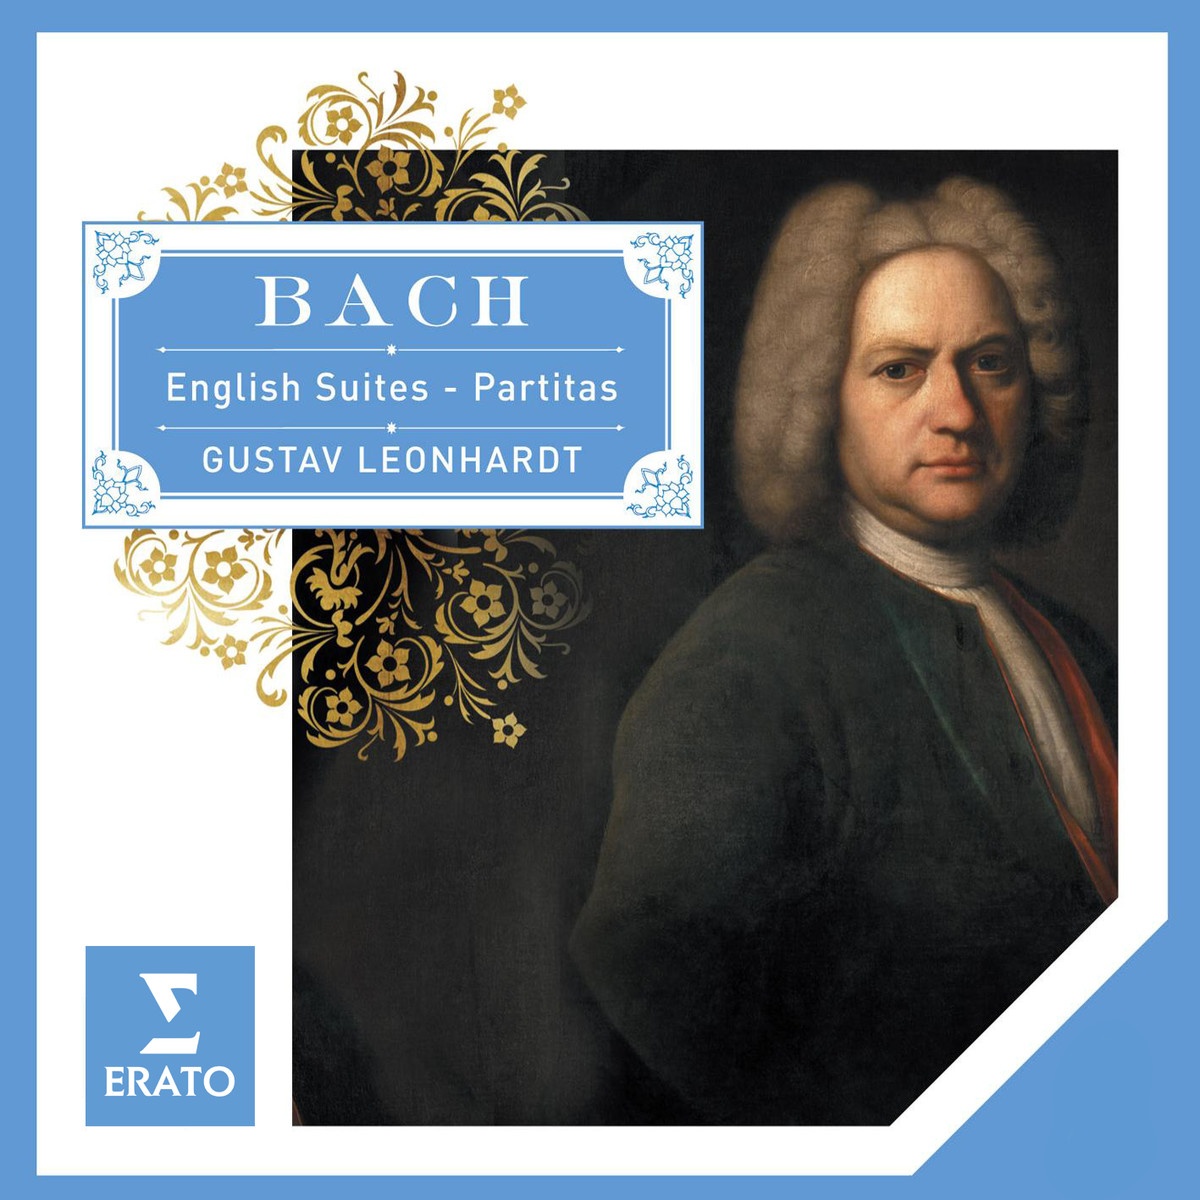 6 English Suites BWV806-811, No. 6 in D minor BWV811: Gavotte I et II